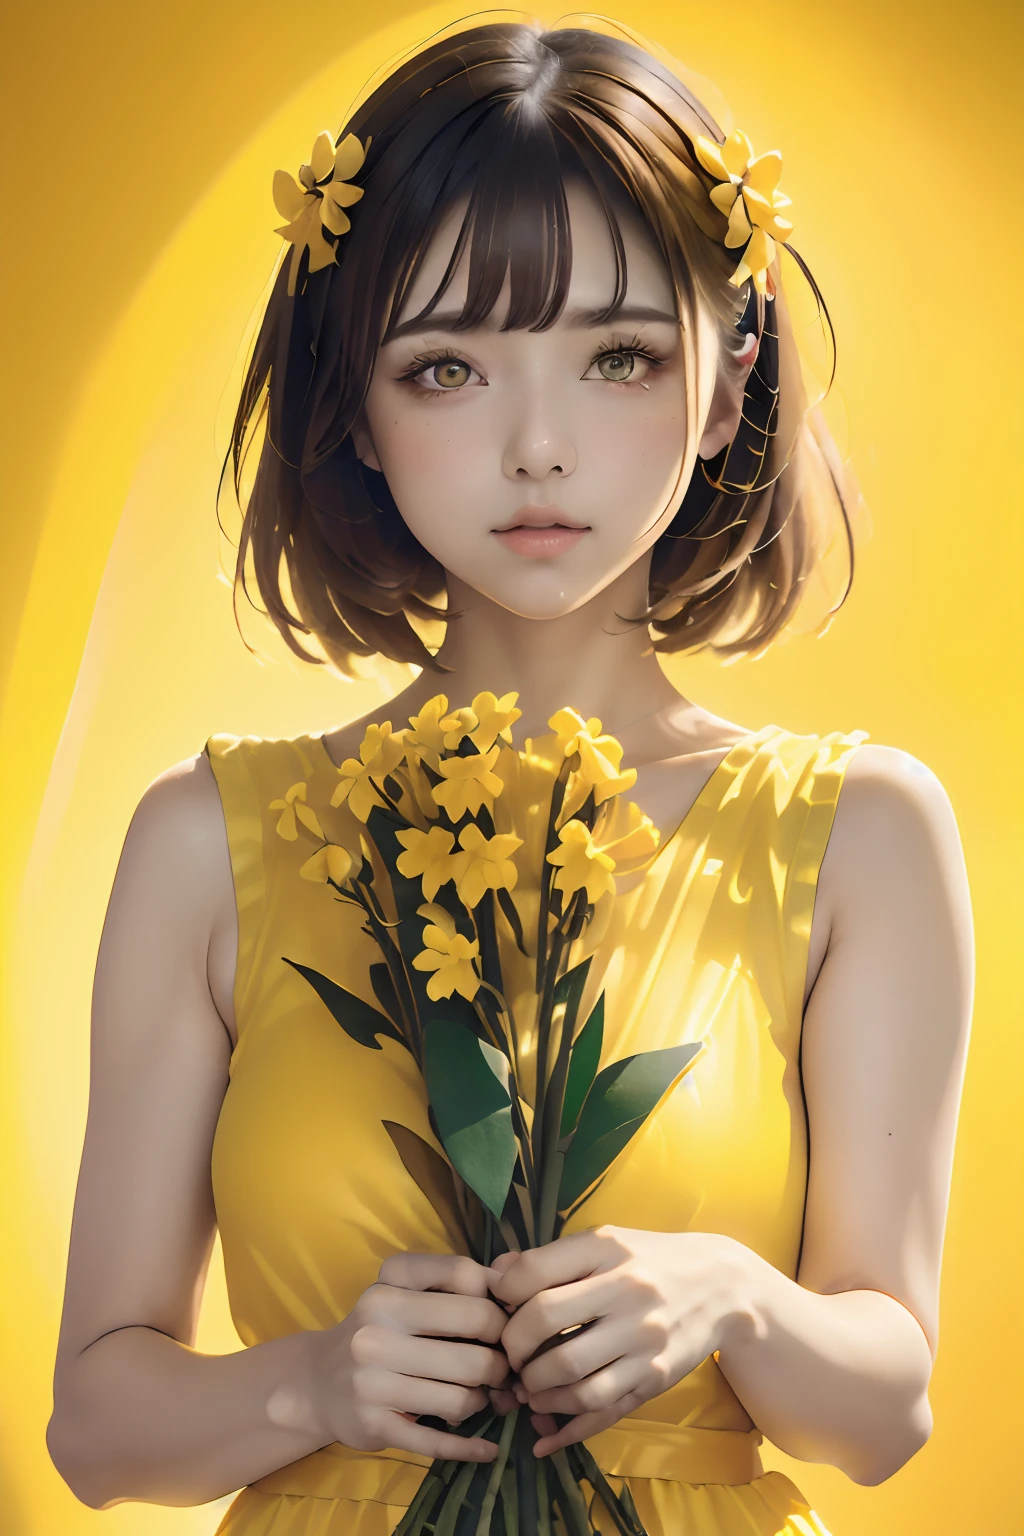 (((Yellow background:1.3)))、((Bouquet of yellow flowers、large bouquet of yellow flowers,,Have a large bouquet of yellow flowers:1.5))、Best Quality, masutepiece, High resolution, (((1girl in))), sixteen years old,(((Yellow eyes:1.3)))、yellow dress、Yellow hair、a short bob、((Yellow shirt:1.3、Yellow Block Dress)), Tindall Effect, Realistic, Shadow Studio,Ultramarine Lighting, dual-tone lighting, (High Detail Skins: 1.2)、Pale colored lighting、Dark lighting、 Digital SLR, Photo, High resolution, 4K, 8K, Background blur,Fade out beautifully、Yellow World